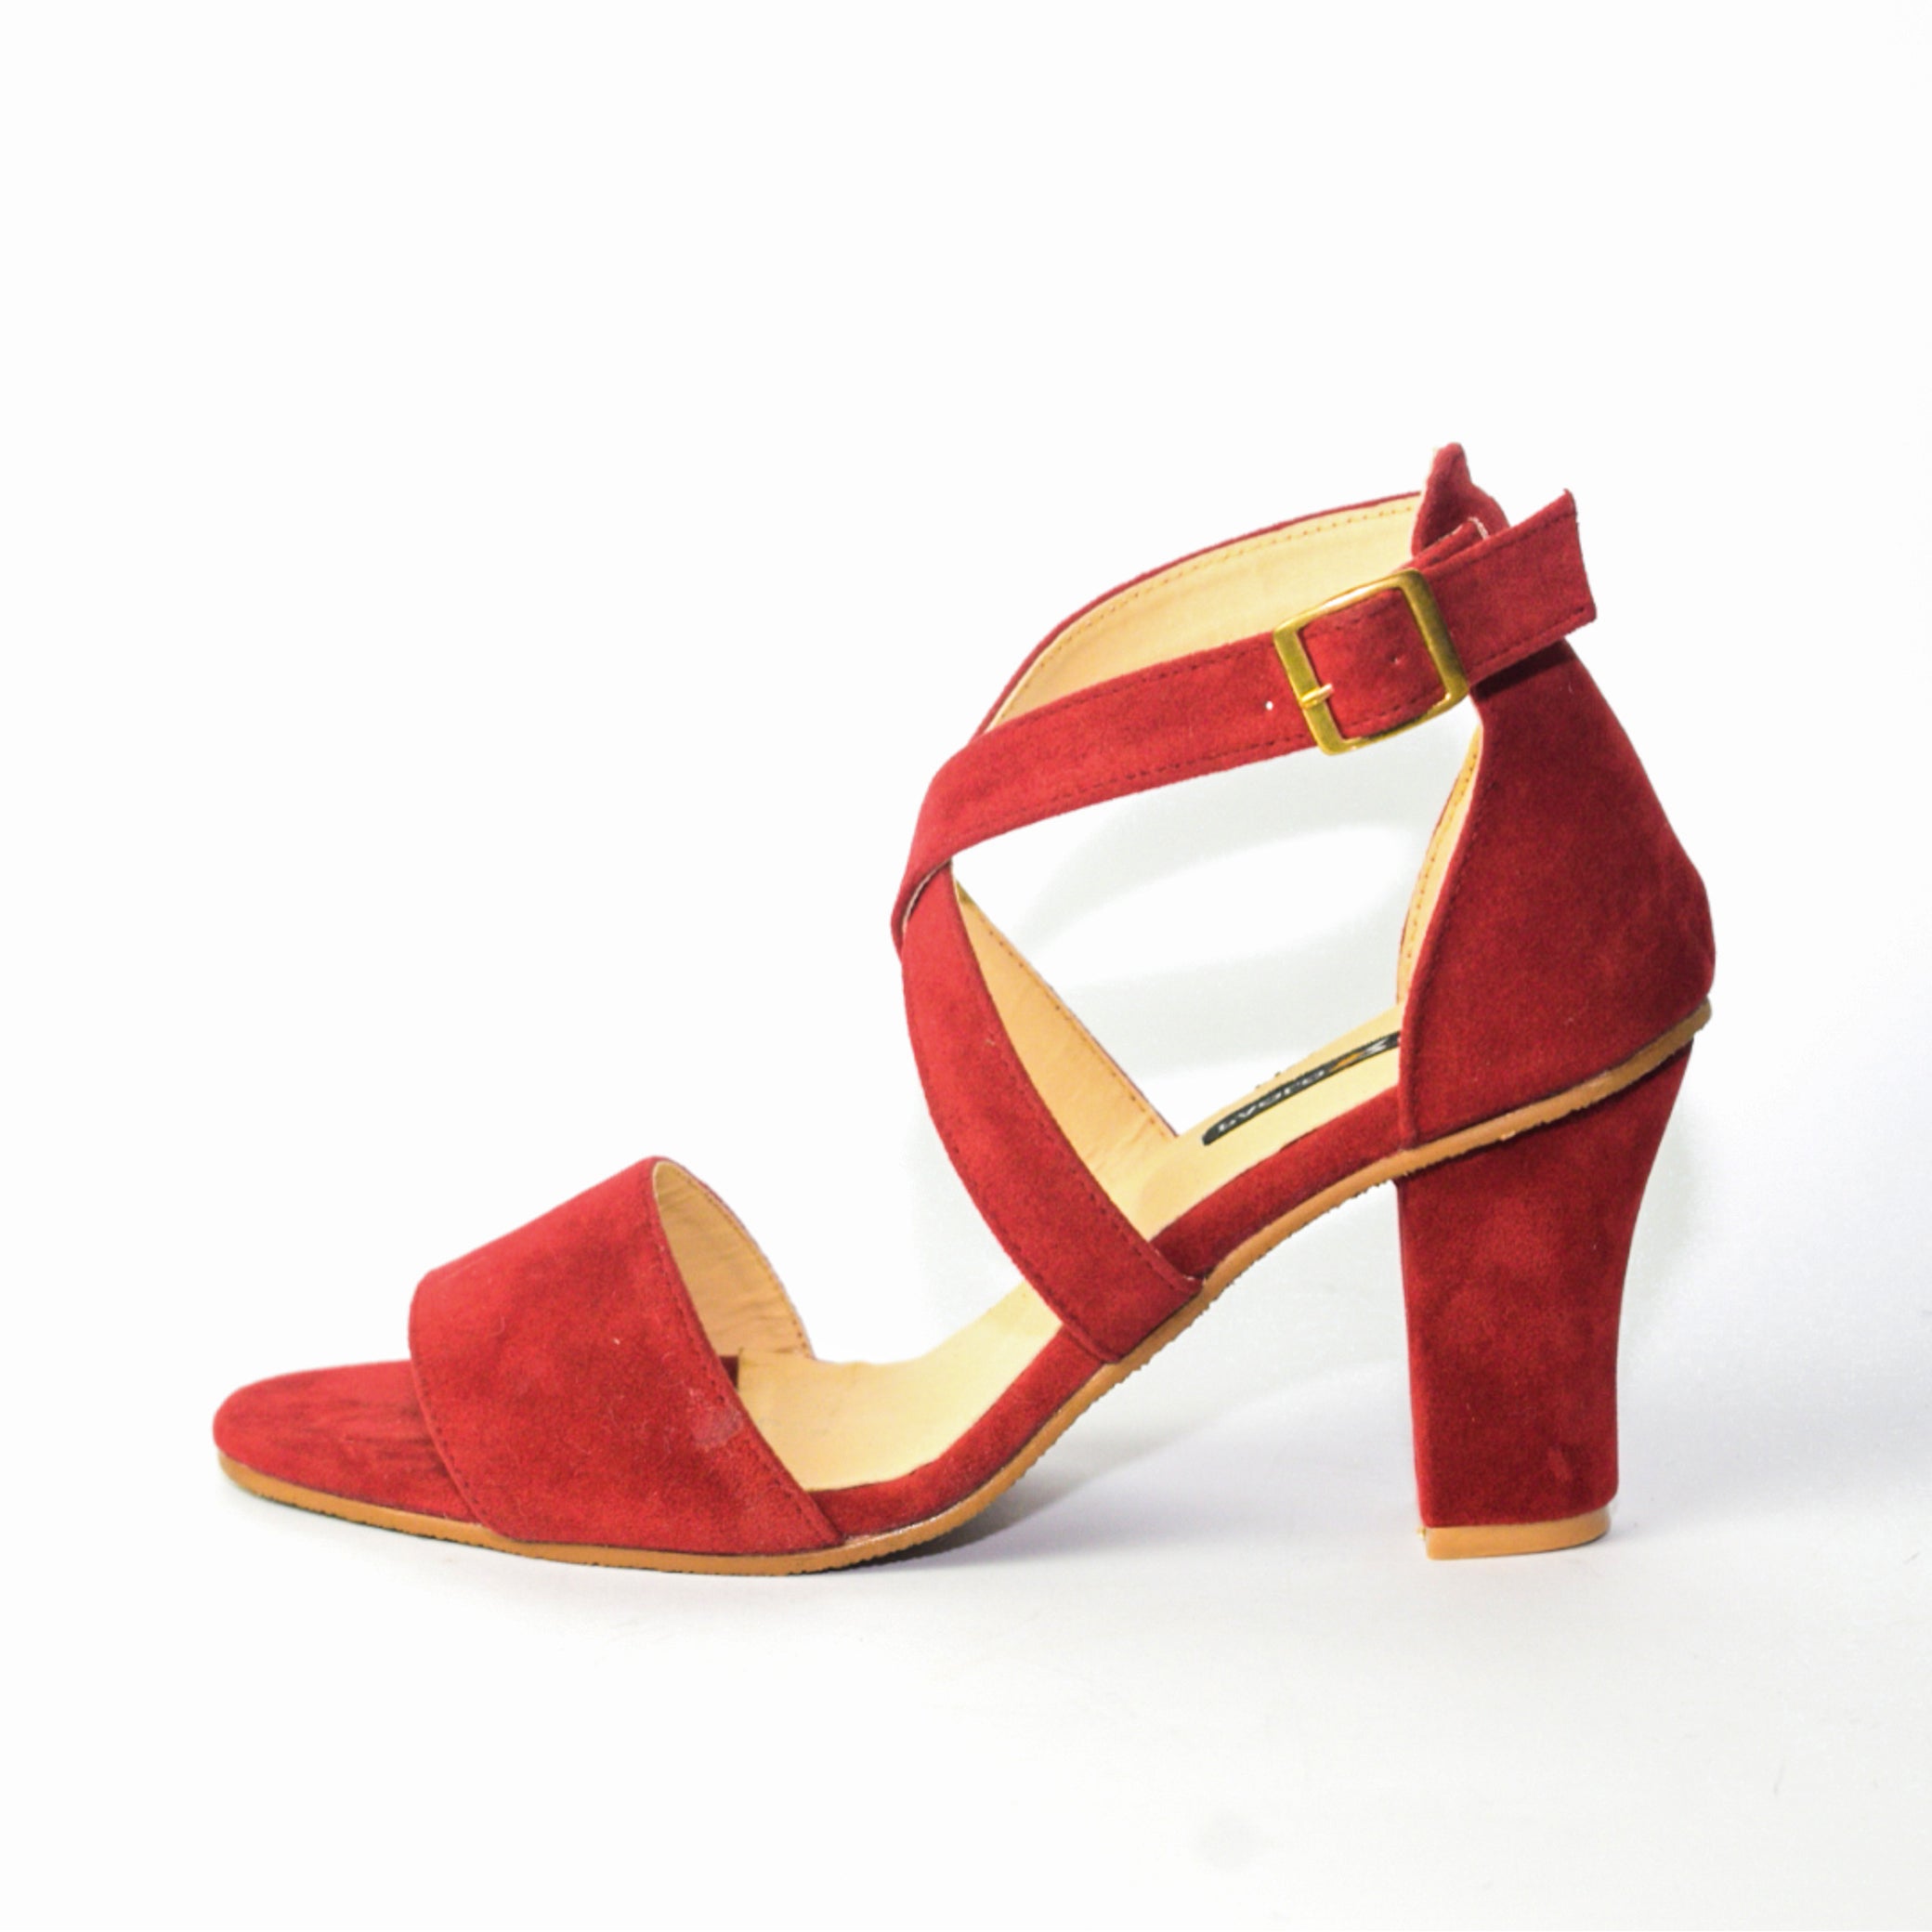 Geox Respira burgundy Italian leather heels (size 39), Women's Fashion,  Footwear, Heels on Carousell